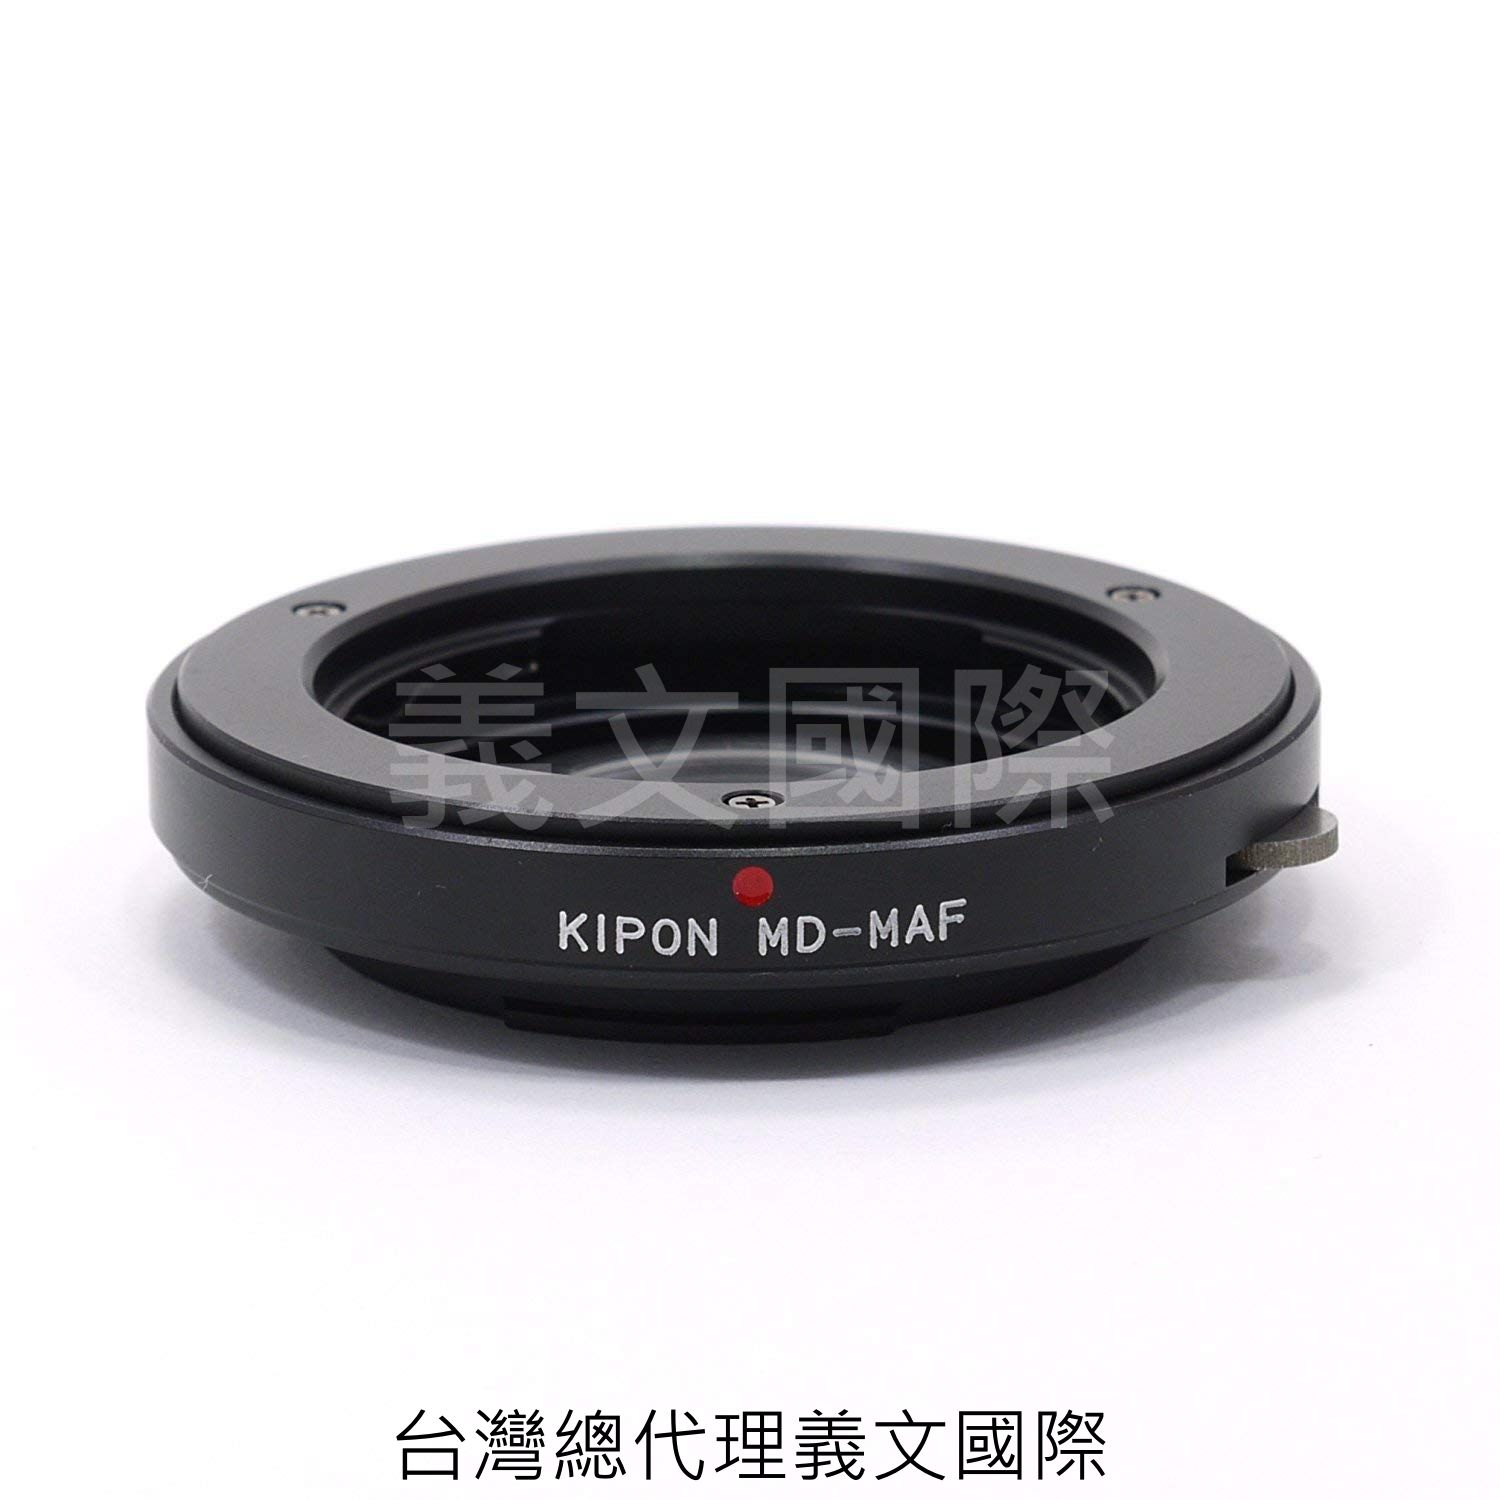 Kipon轉接環專賣店:MD-MAF(Minolta,美能達,Sony Alpha,索尼,A99,A77,A99II,A77II)